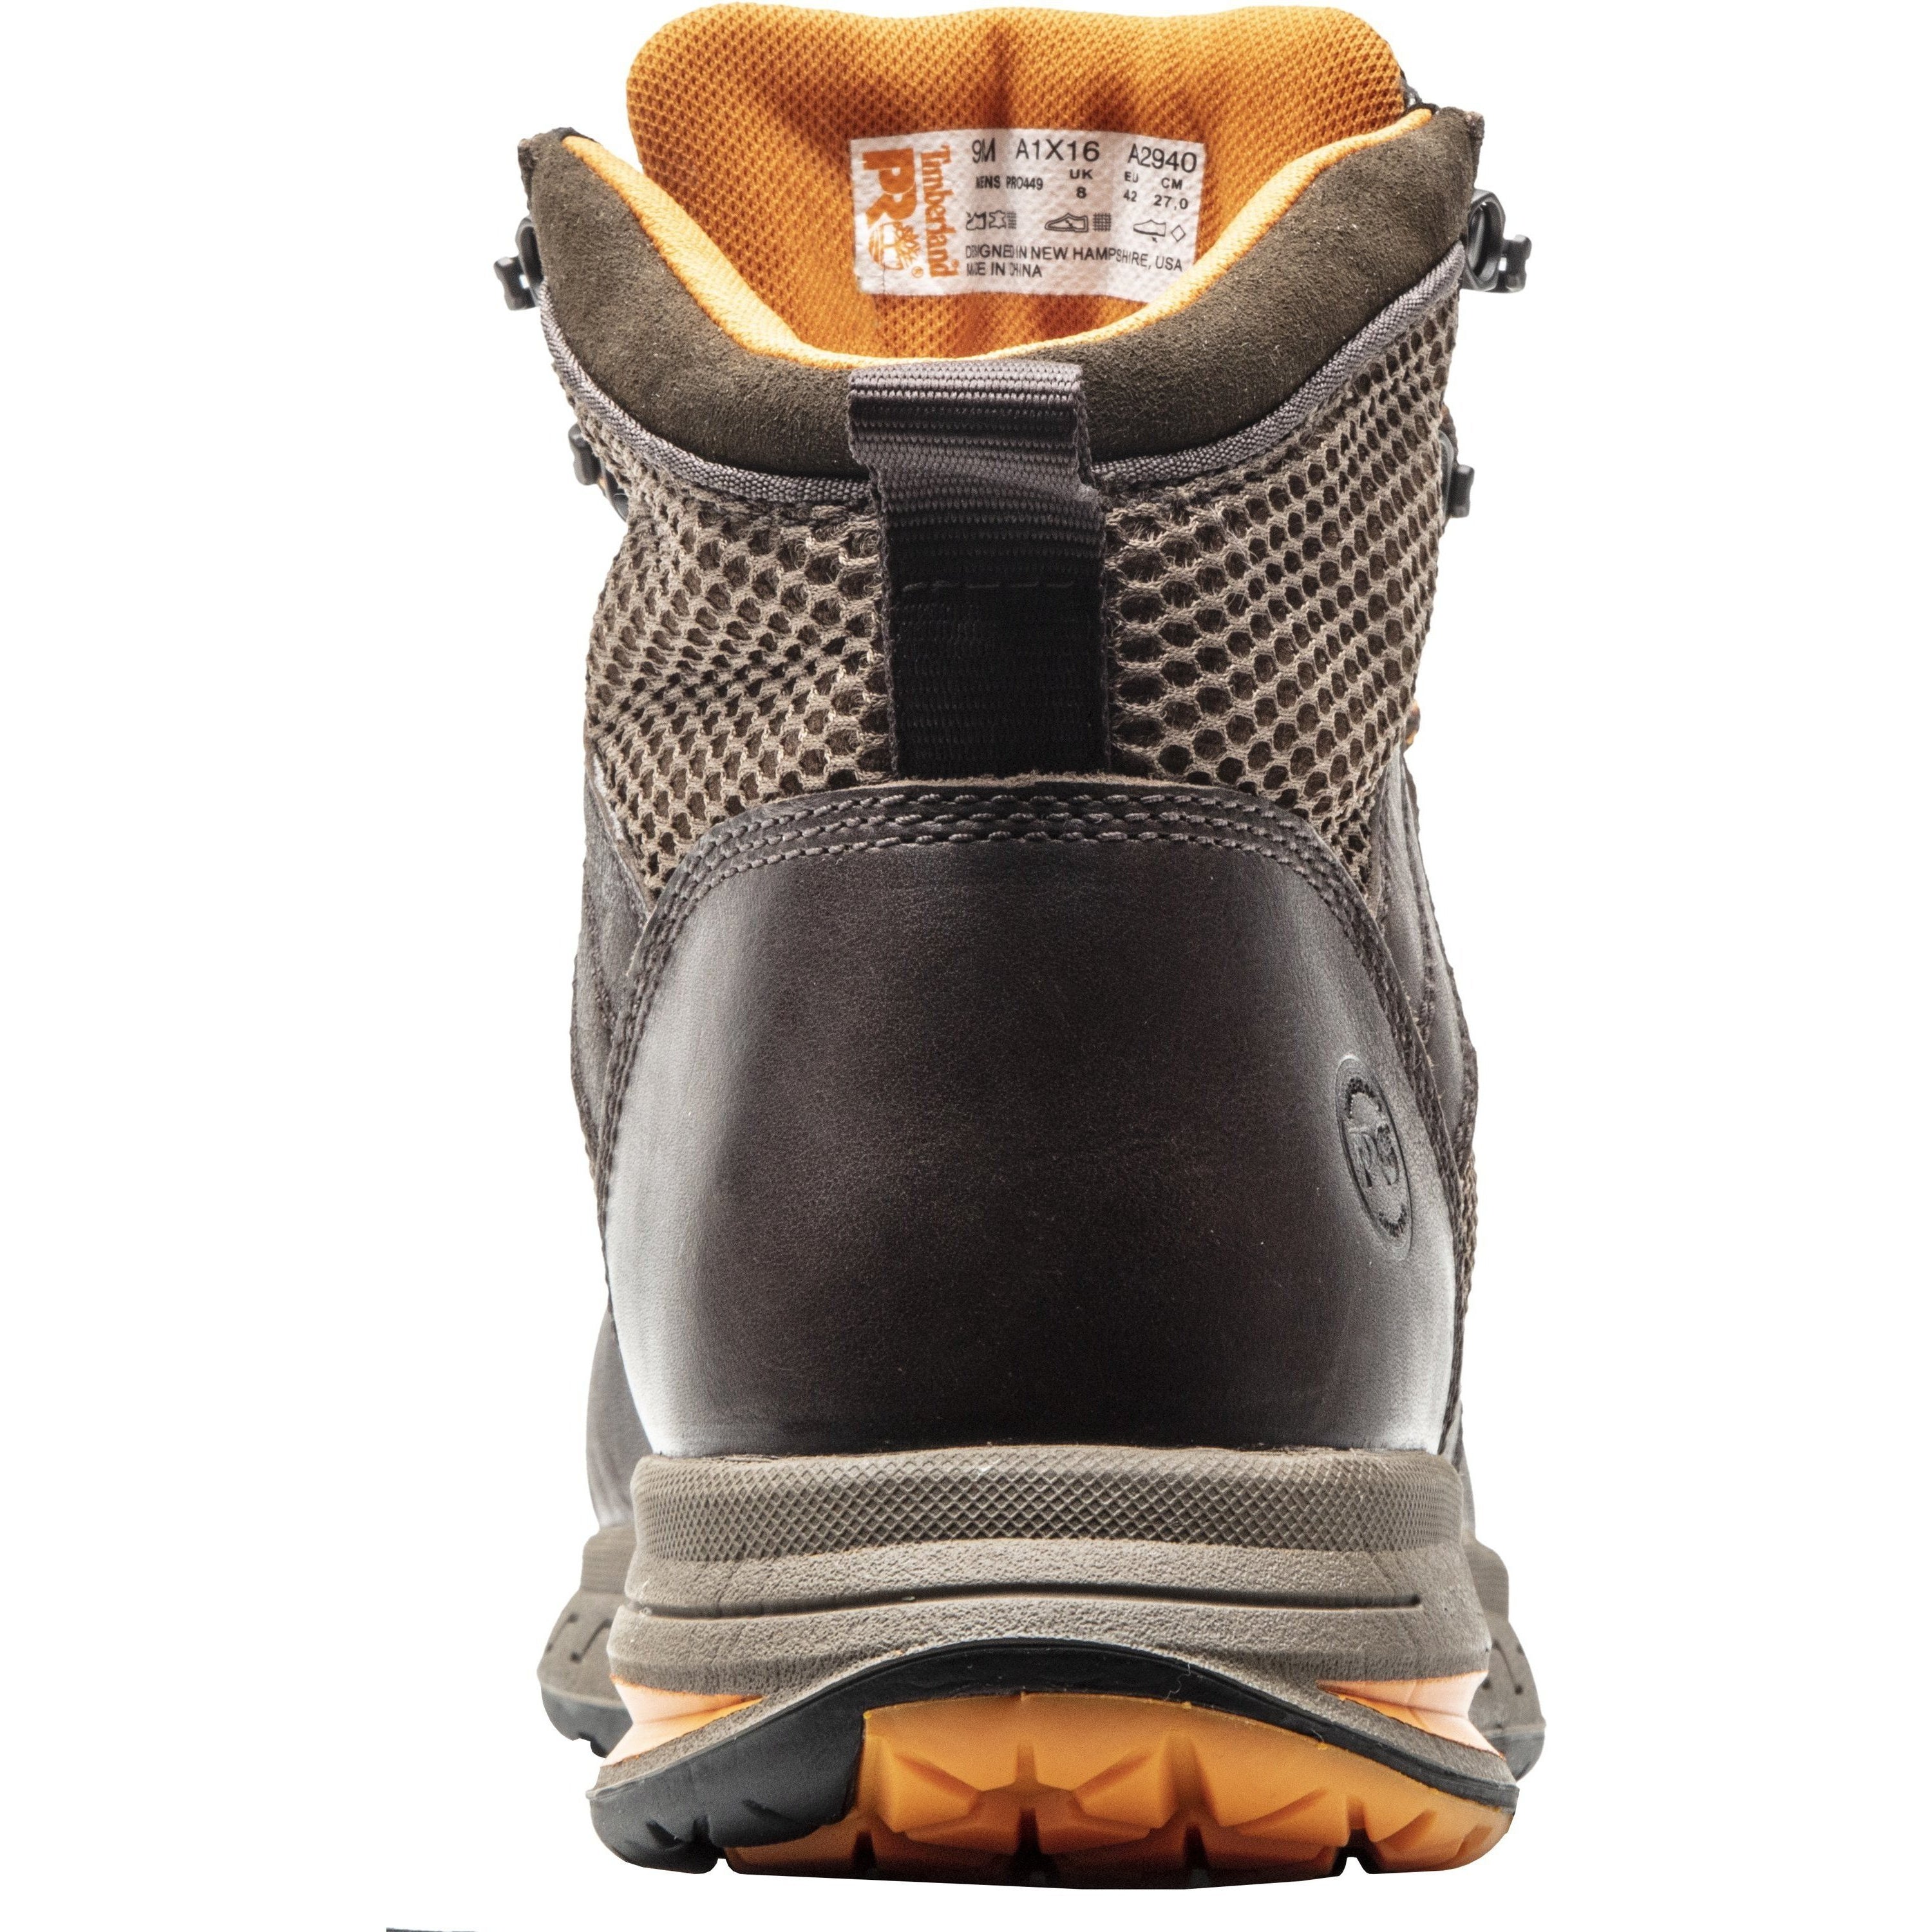 Timberland PRO Men's Drivetrain Comp Toe Work Boot Brown - TB0A1X16214  - Overlook Boots